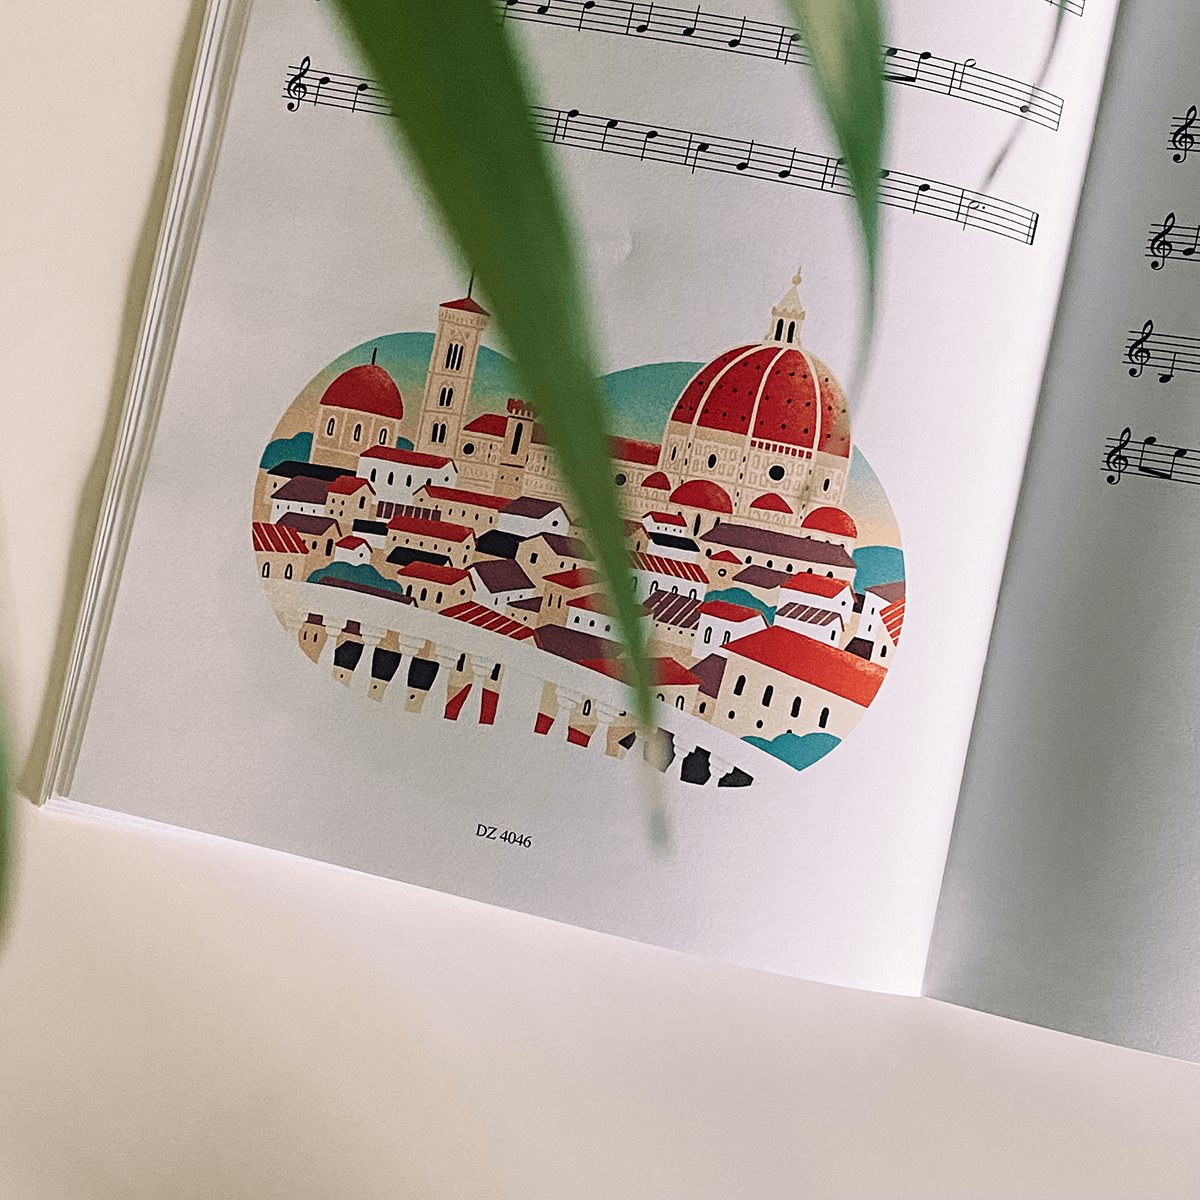 Sasha-Kolesnik_Music-book-illustration_Florence